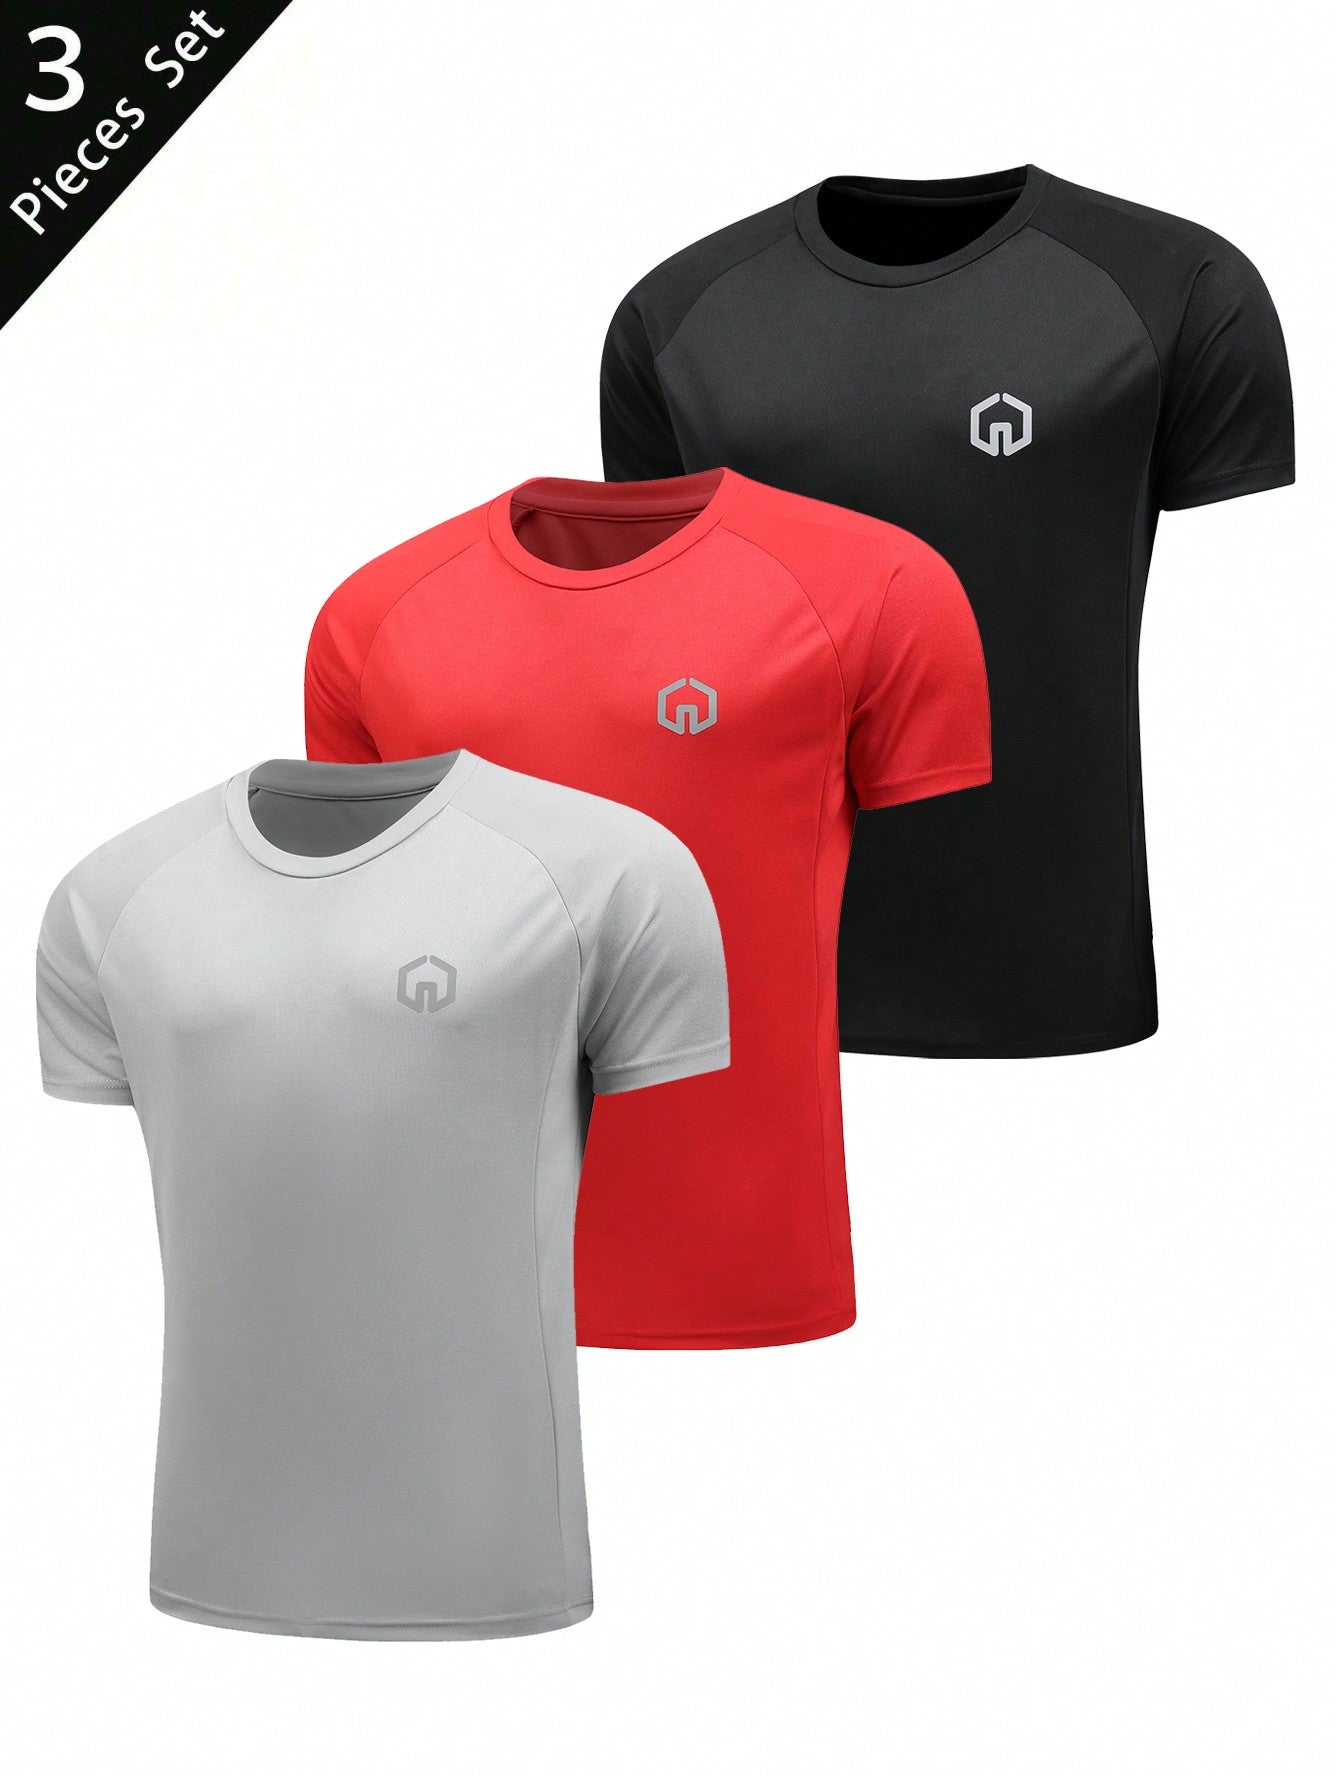 Men's Printed Sleeve Elastic Breathable Short Raglan Sleeve Sports T-Shirt Workout Tops